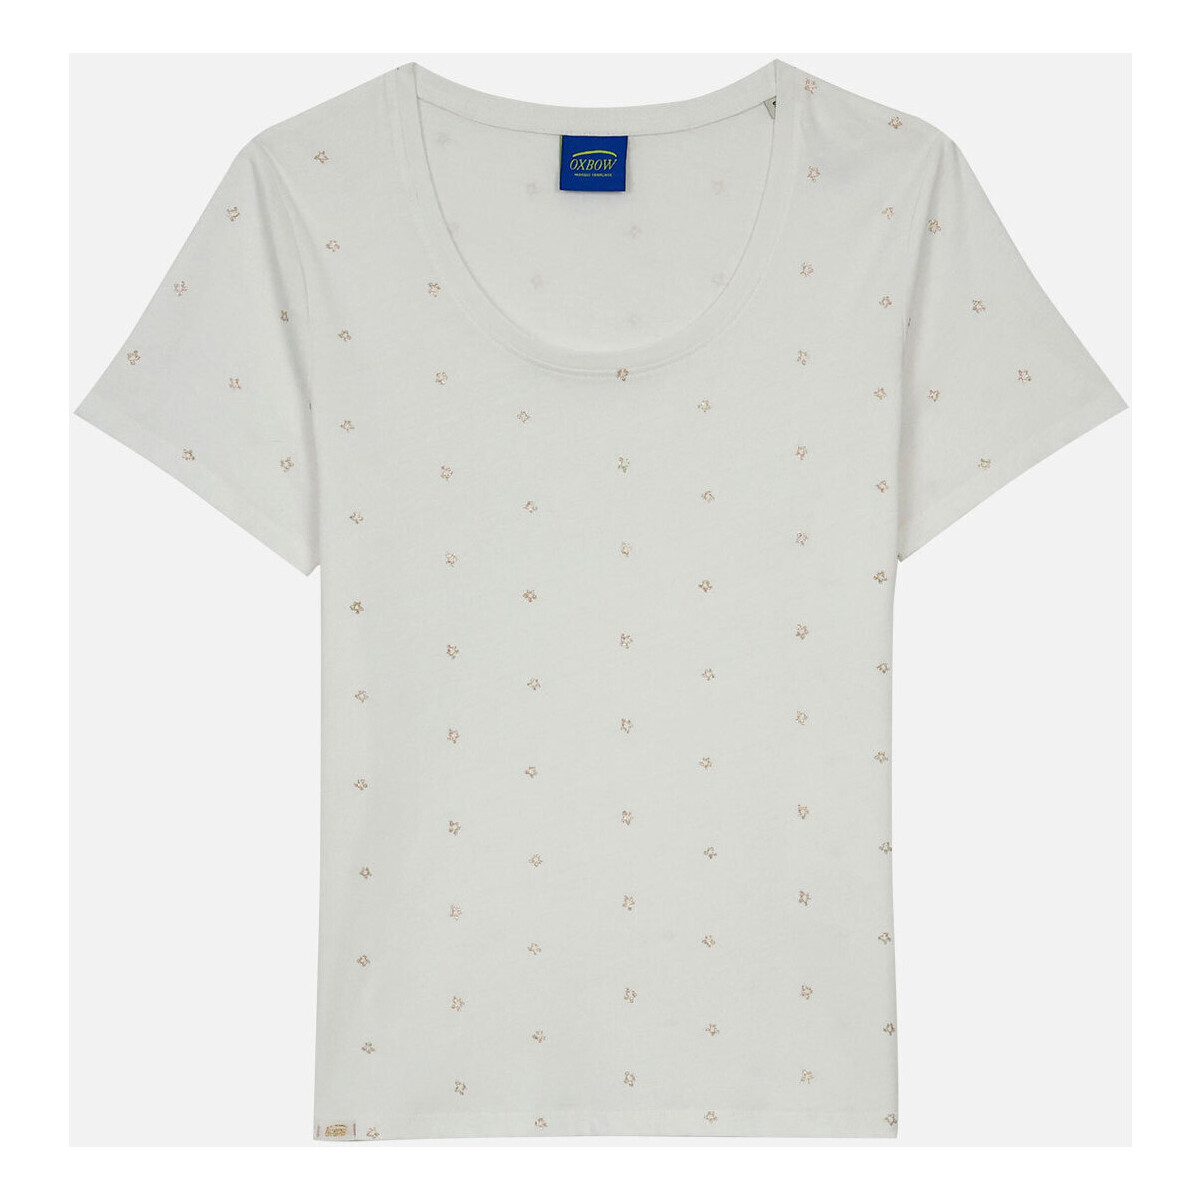 Textil Mulher T-Shirt mangas curtas Oxbow Tee Branco